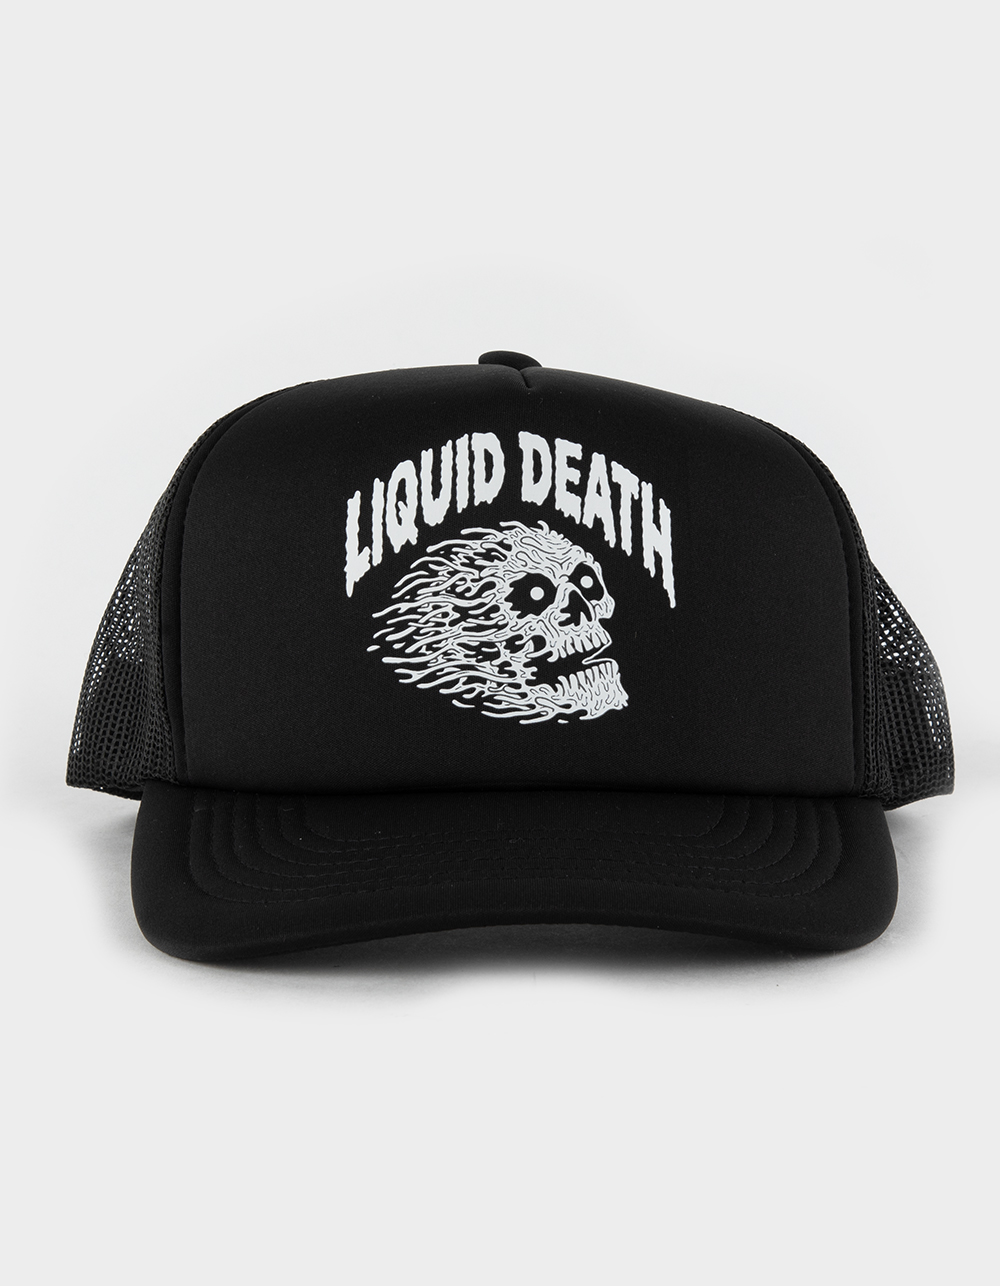 LIQUID DEATH Vicious Death Mens Trucker Hat - BLACK